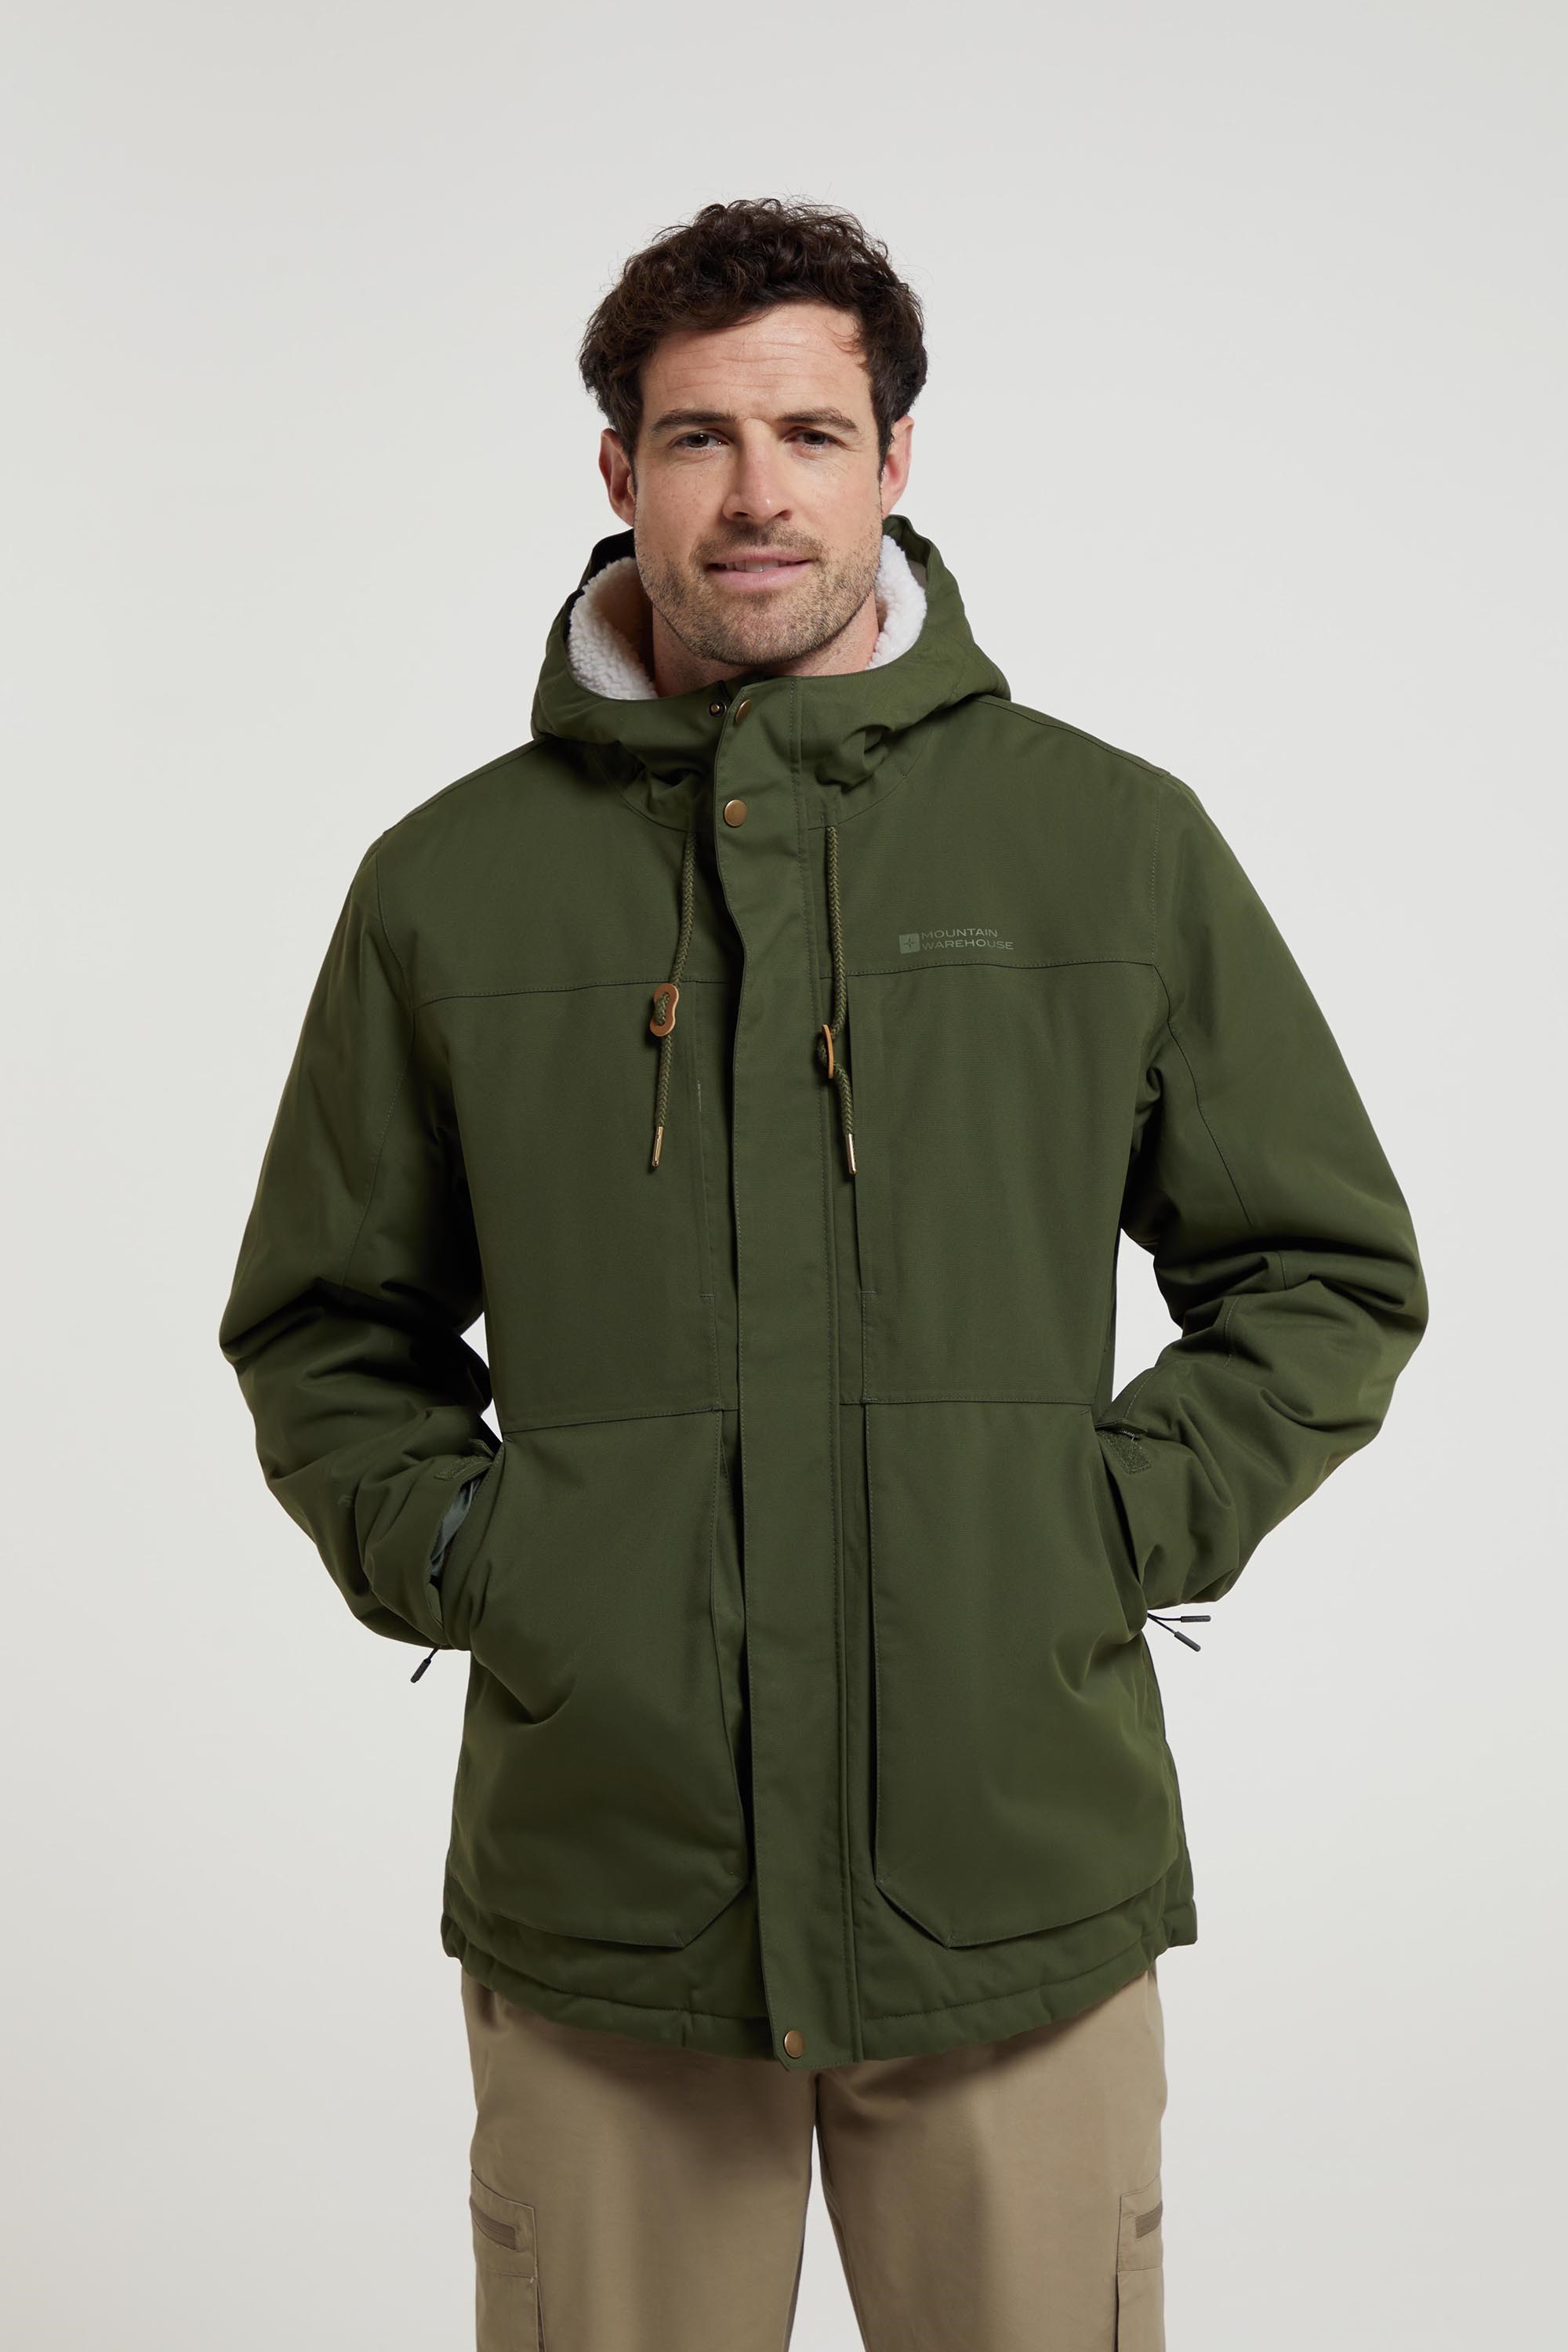 Buy JOGERBRO Mens Waterproof Rain Jacket with Hood Hiking Fishing Windproof  Raincoat, Green, Large at Amazon.in